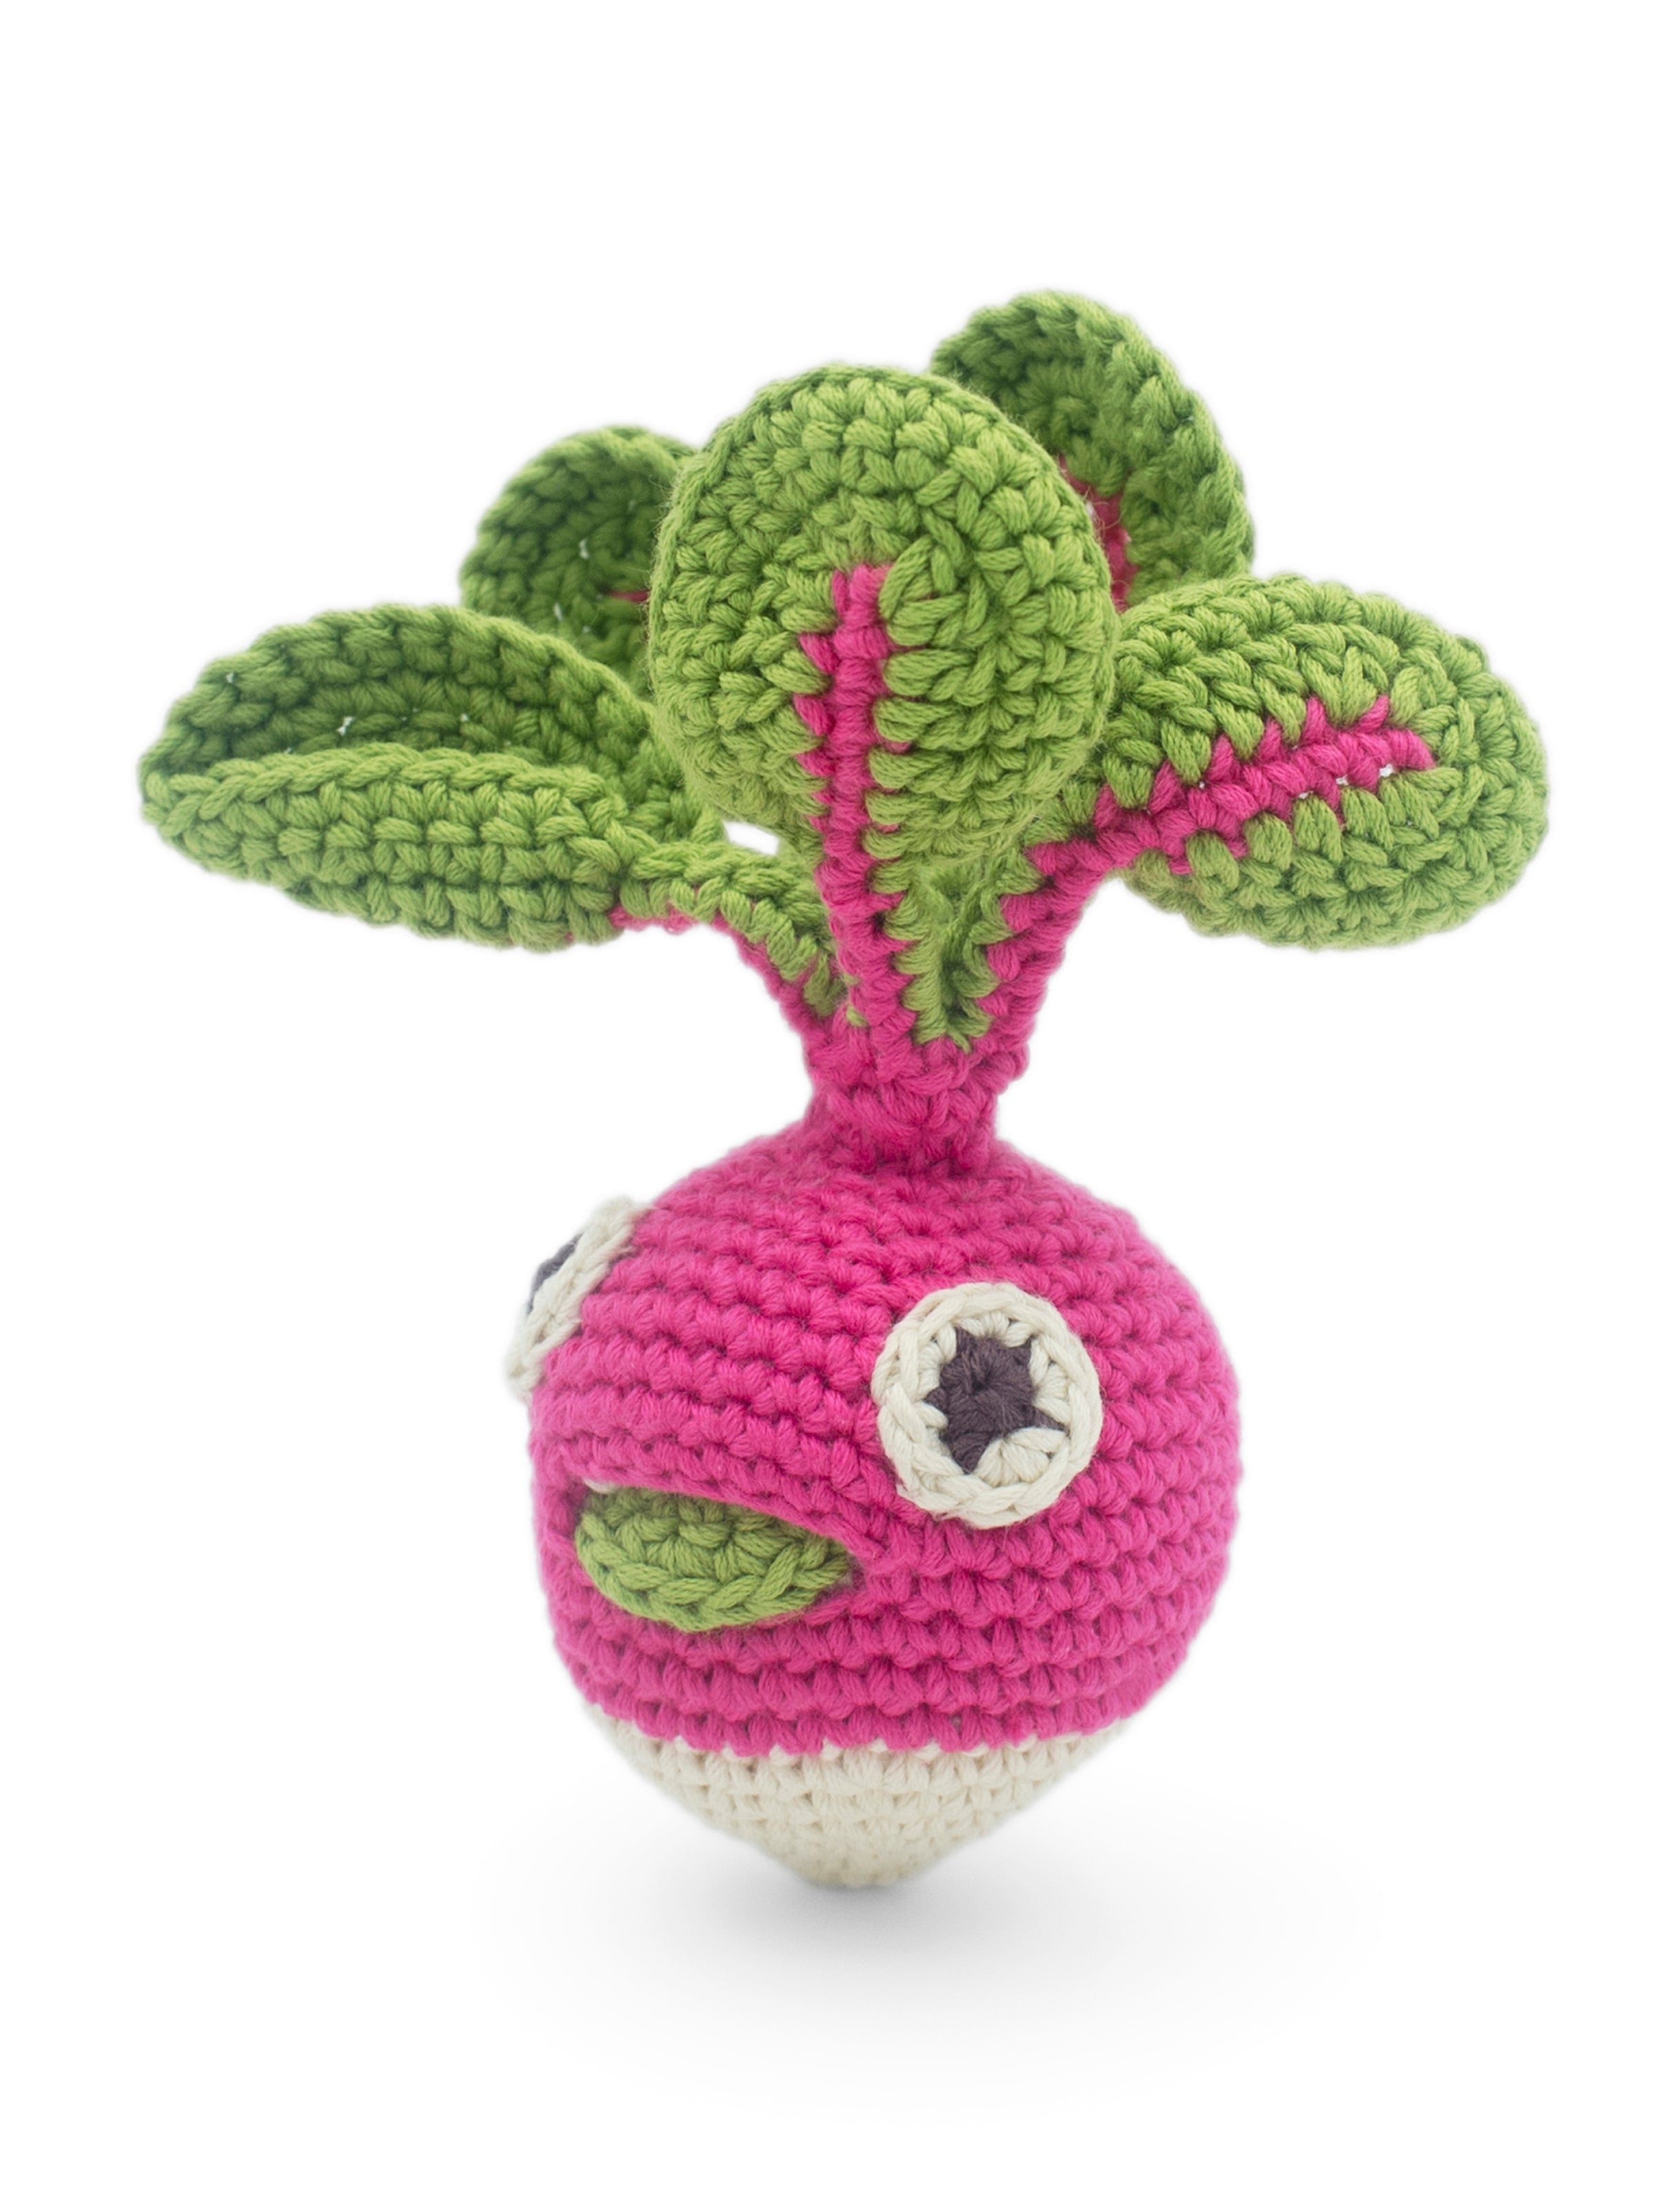 Crochet Radish Rattle